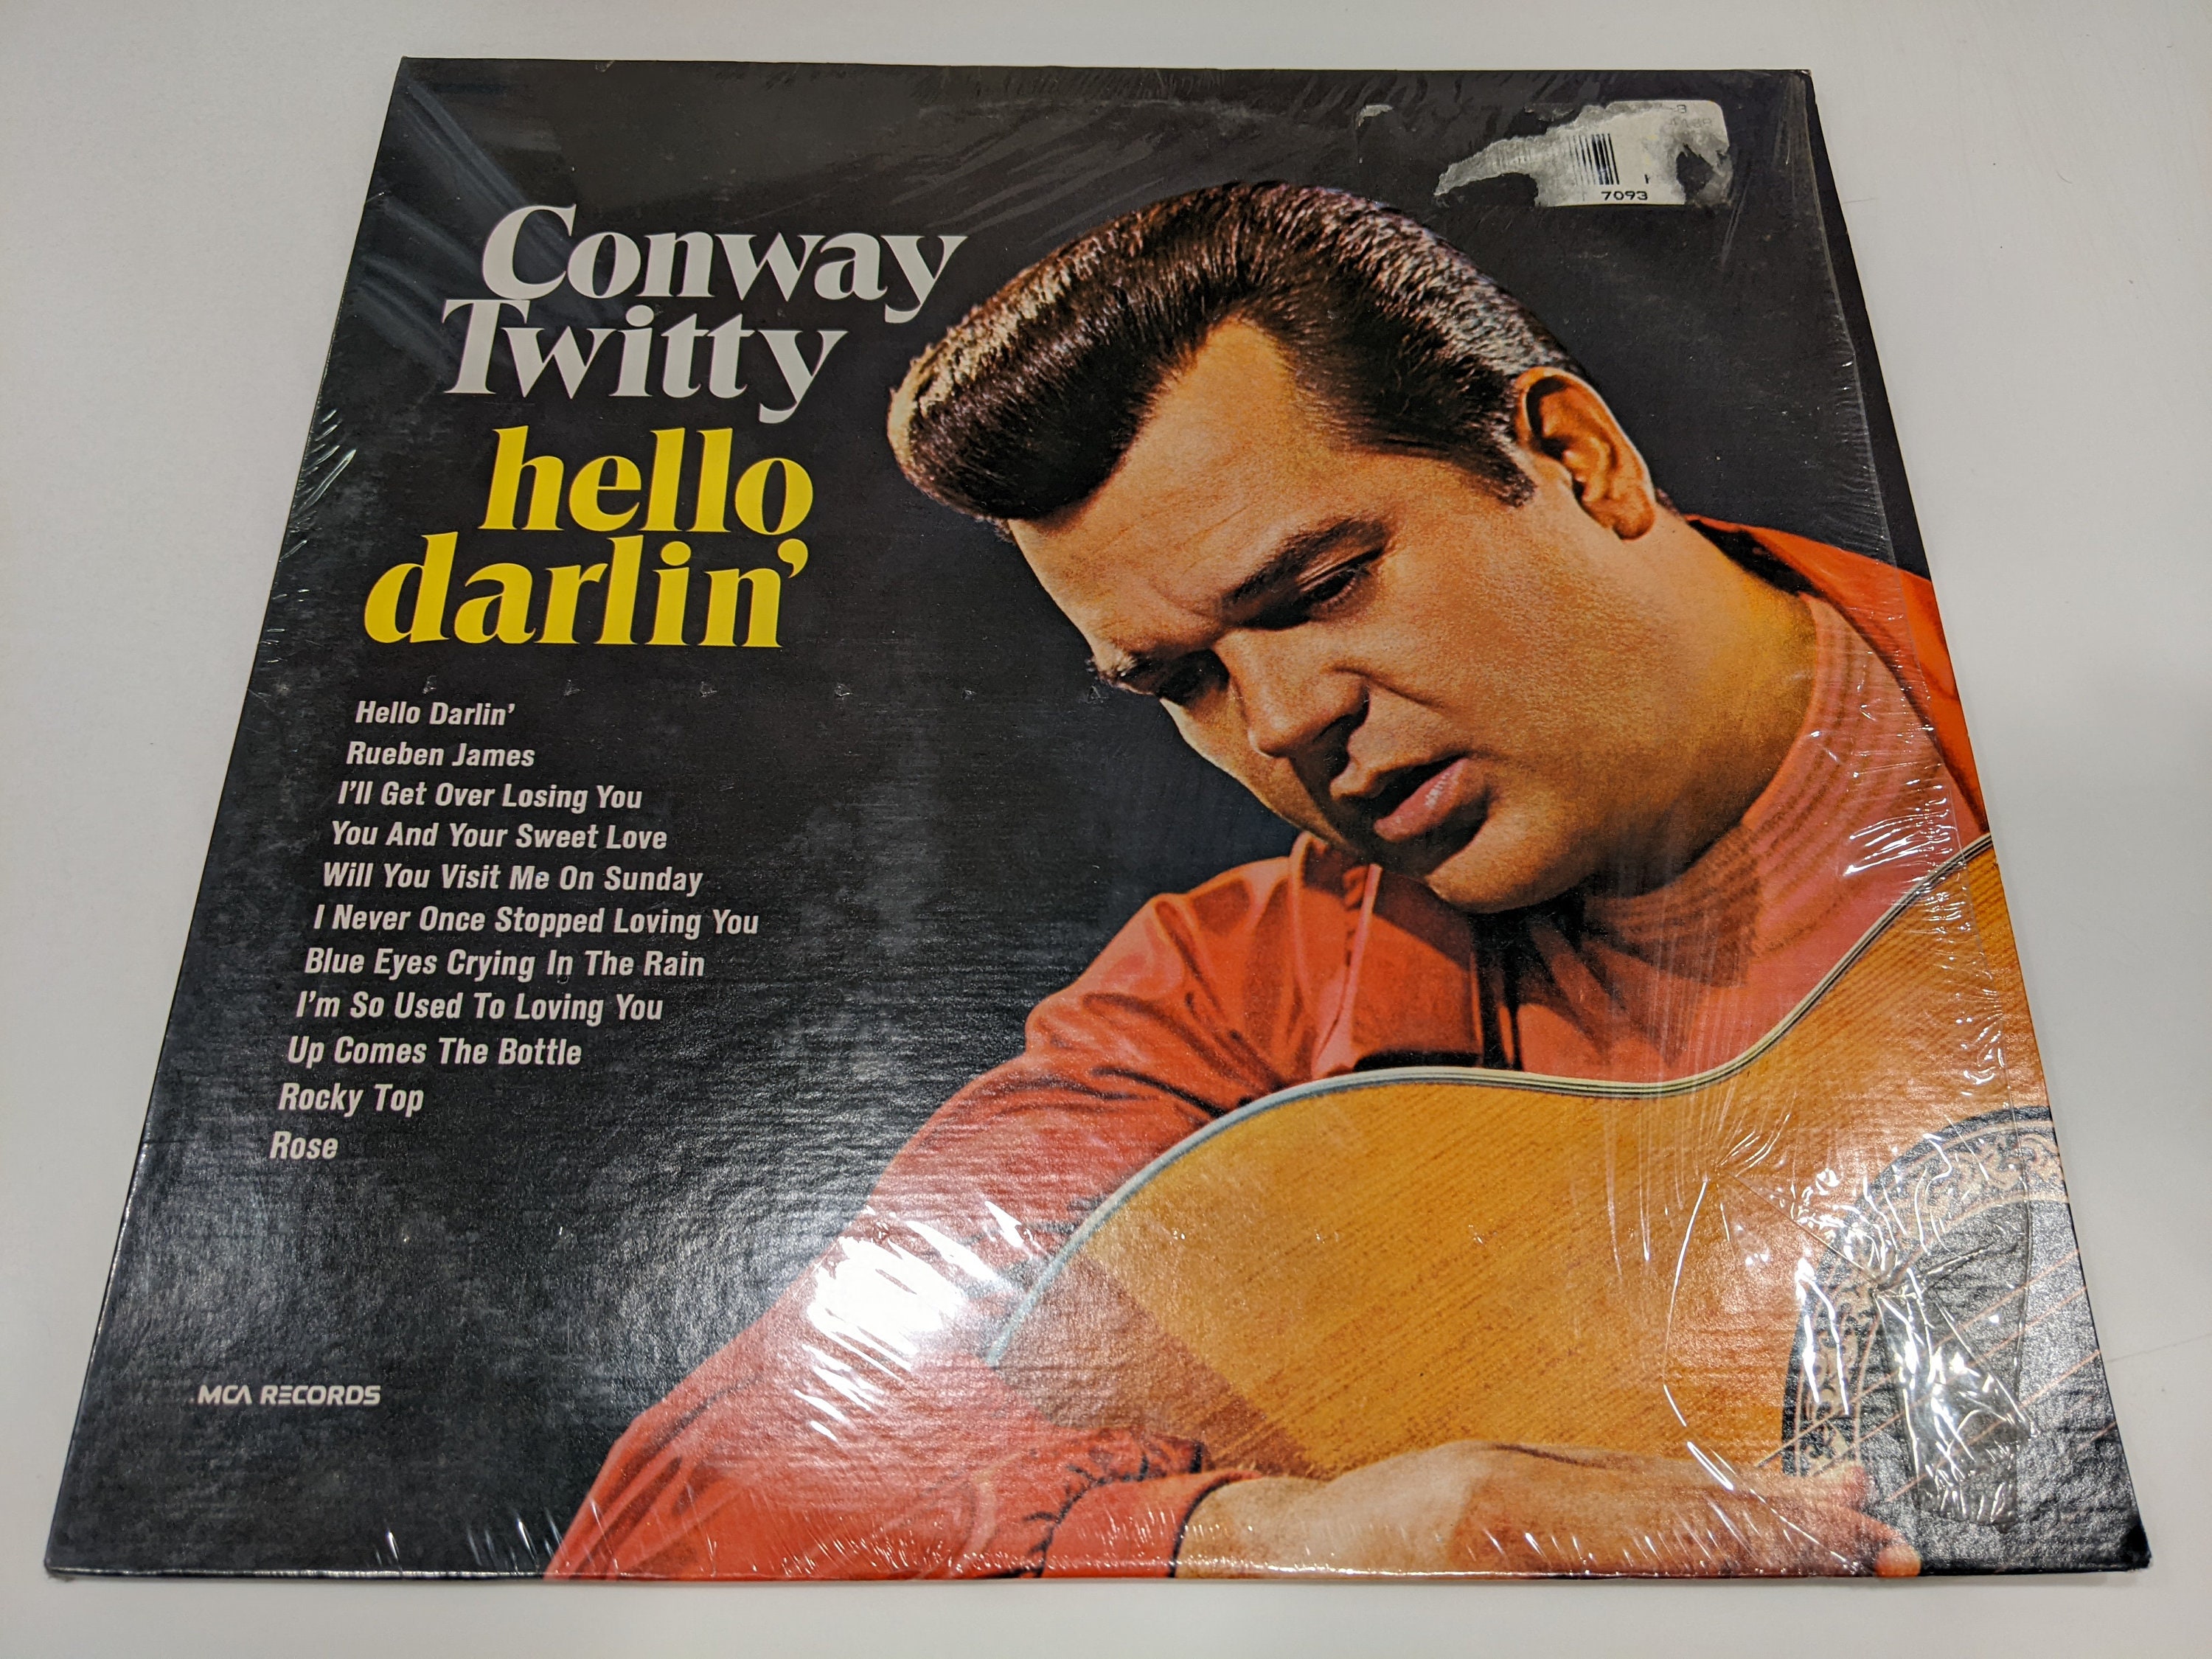 Sudan Spectacle filosofisk Conway Twitty hello Darlin' Vinyl LP NM - Etsy